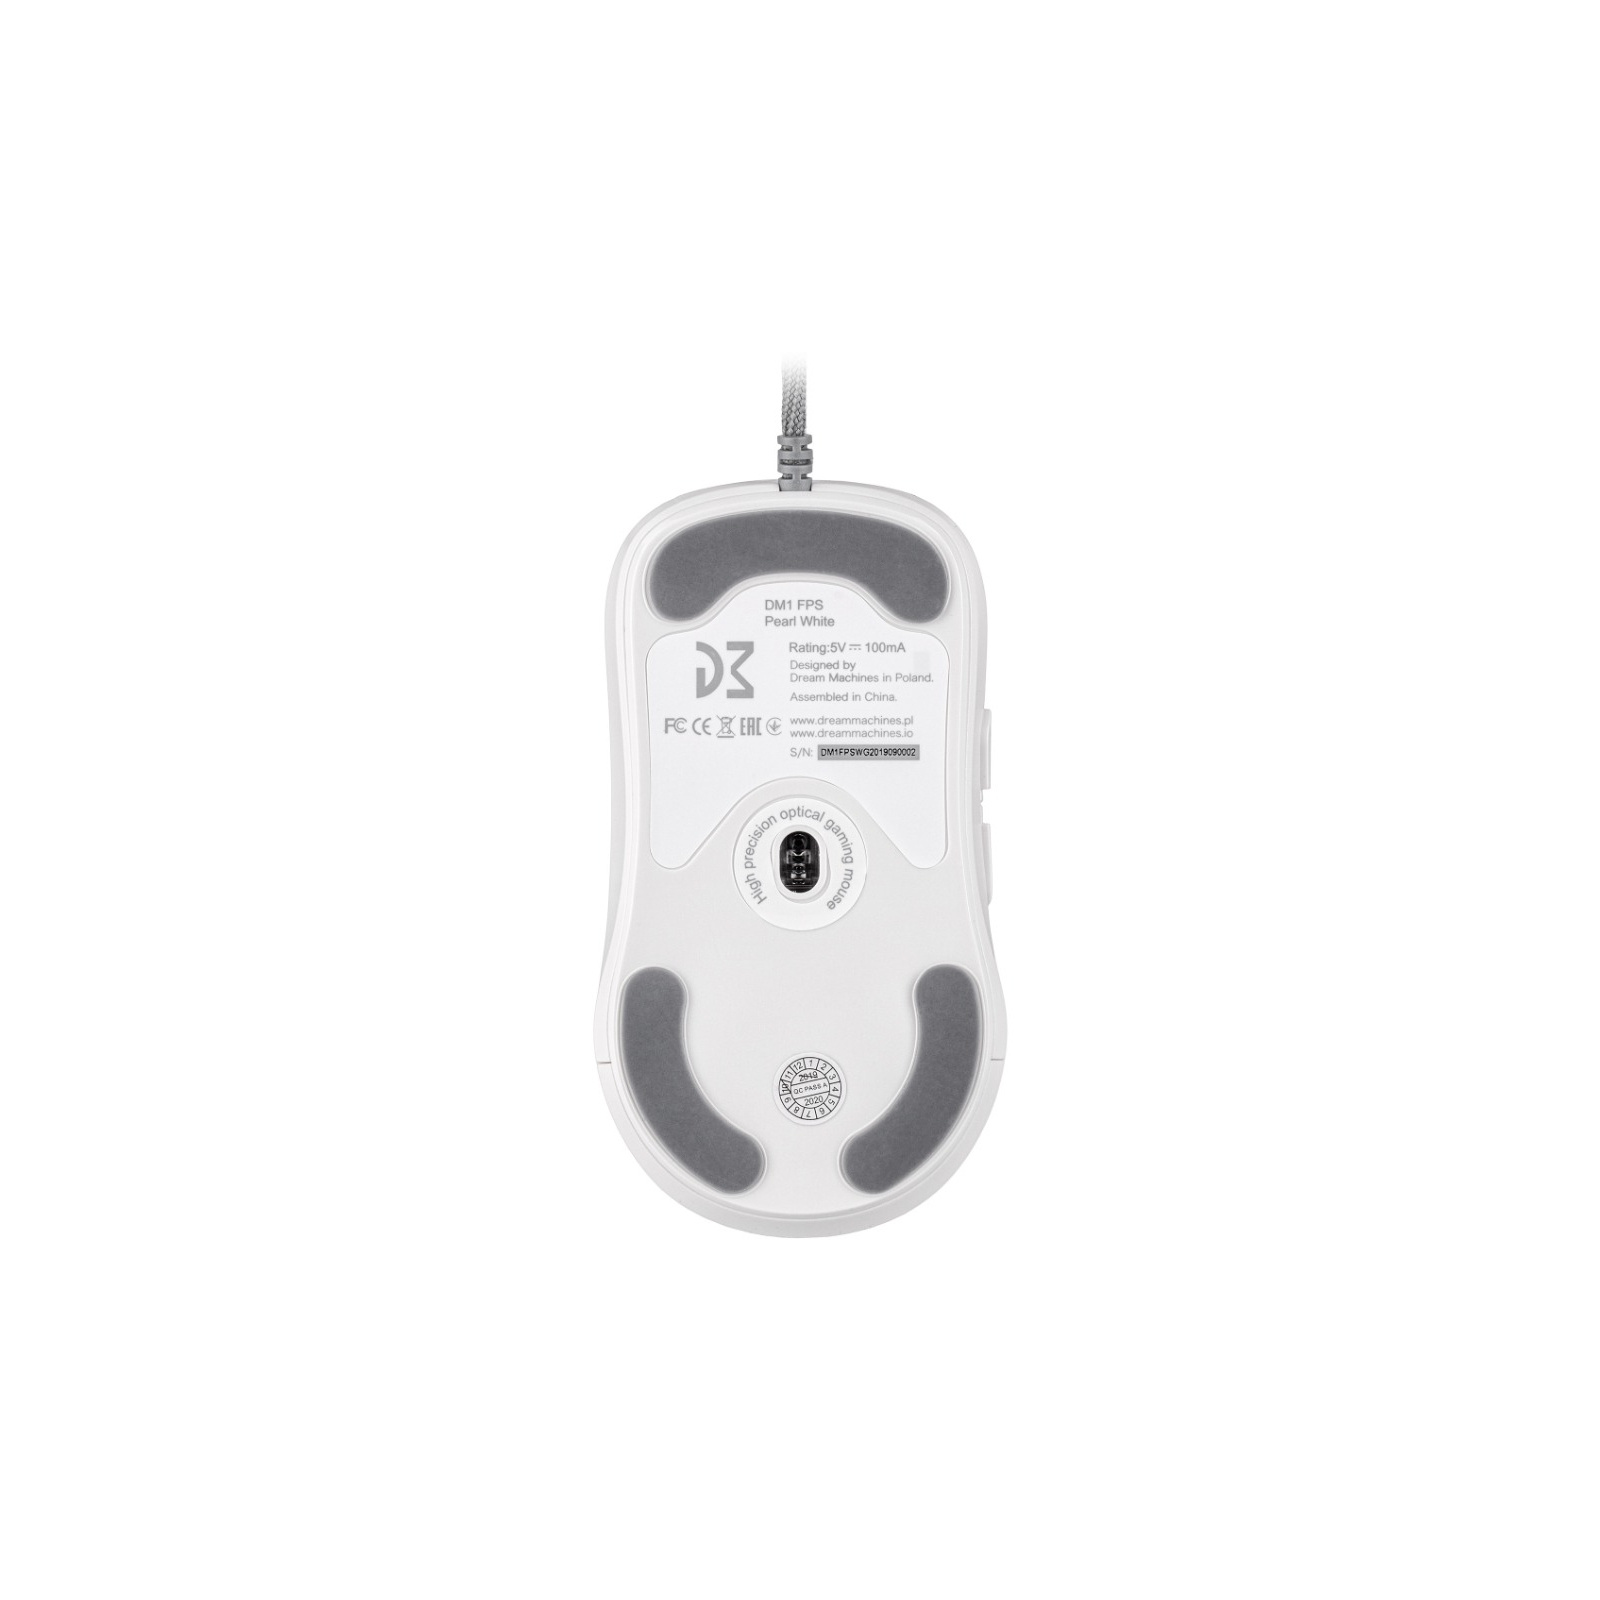 Мышка Dream Machines DM1 FPS USB Pearl White (DM1FPS_WHITEGLOSSY) изображение 6